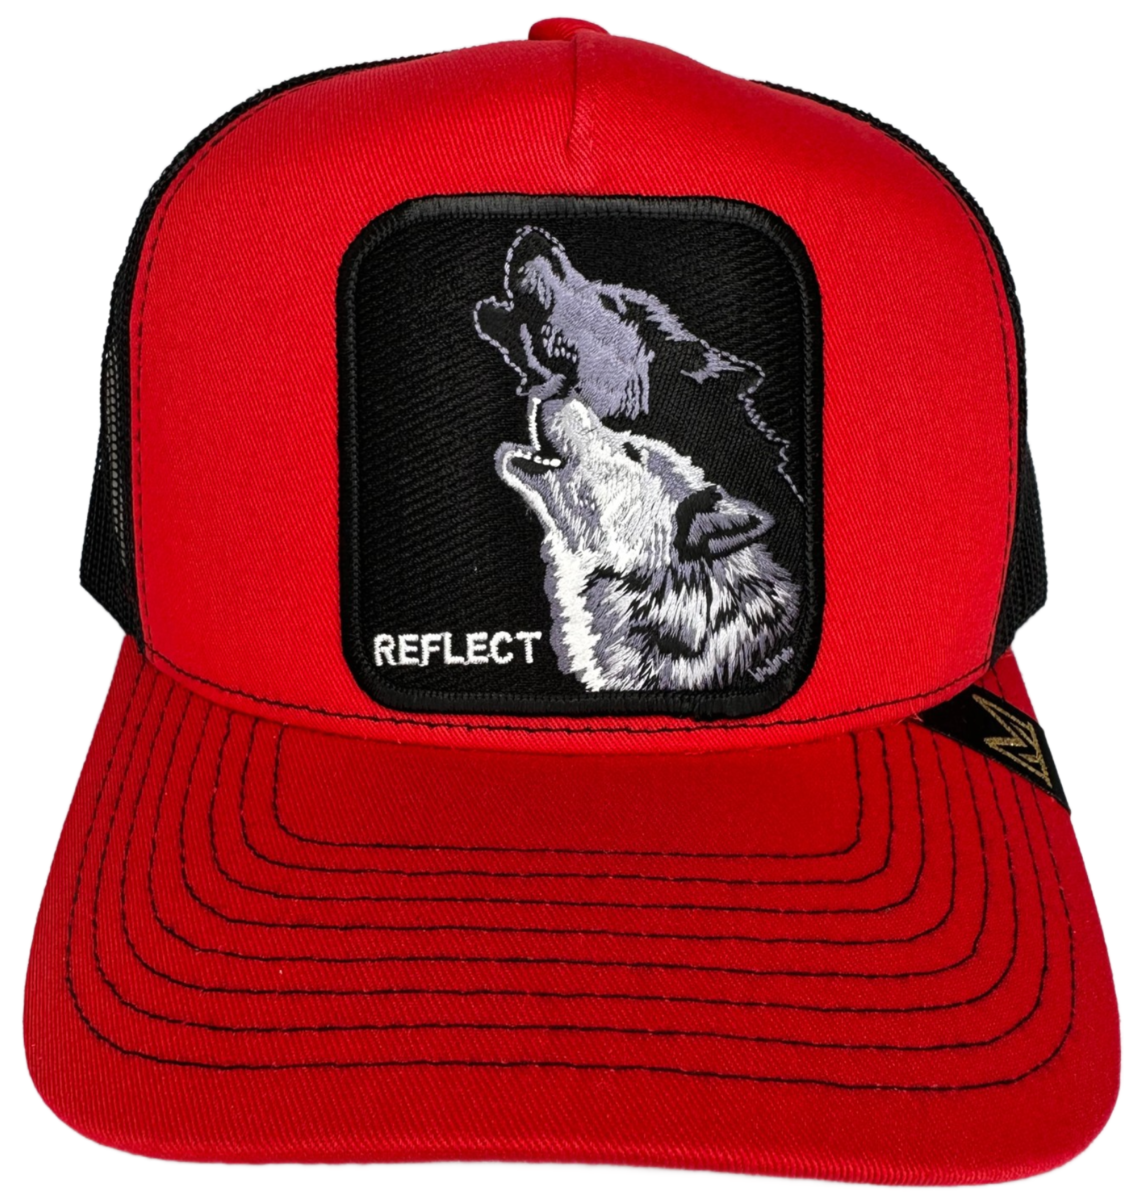 MV Dad Hats - Reflect Trucker Hat - Red/Black